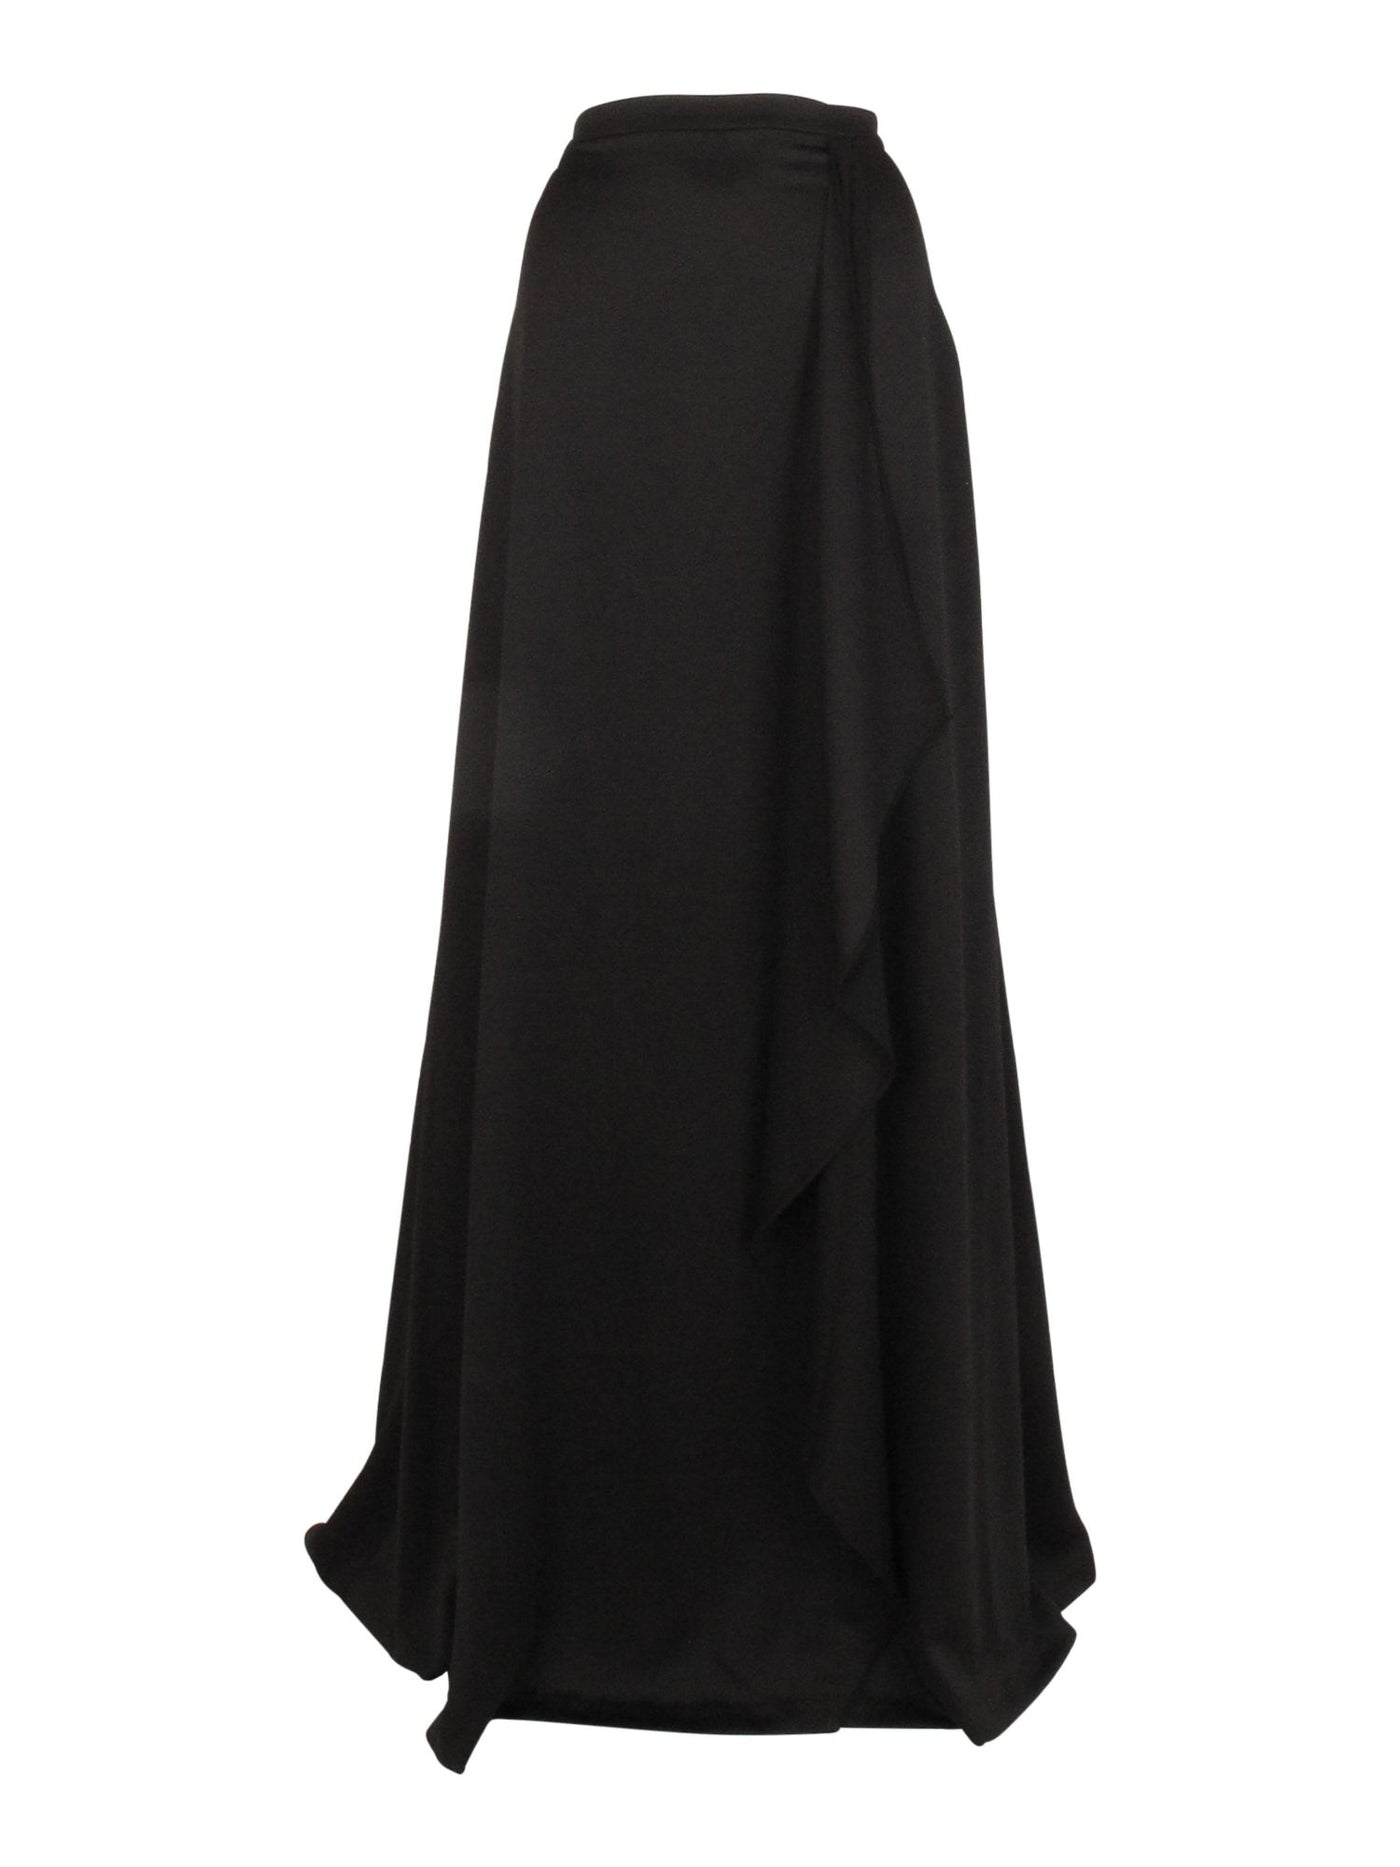 ADRIANNA PAPELL Womens Black Stretch Ruffled Zippered Satin Full-Length Evening A-Line Skirt Plus 16W